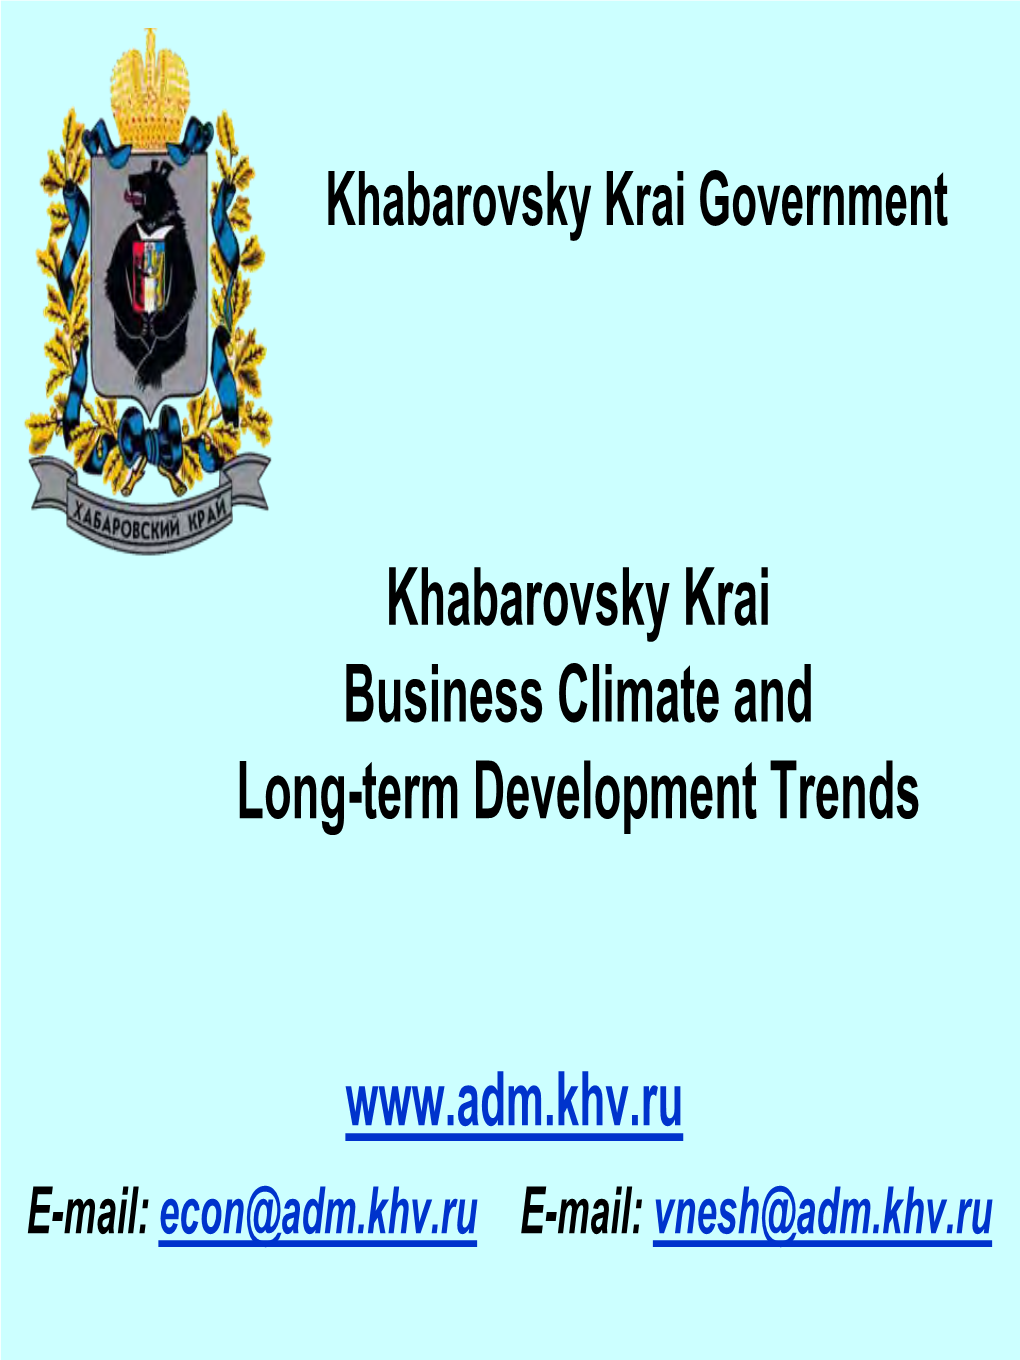 Khabarovsky Krai Business Climate and Long-Term Development Trends